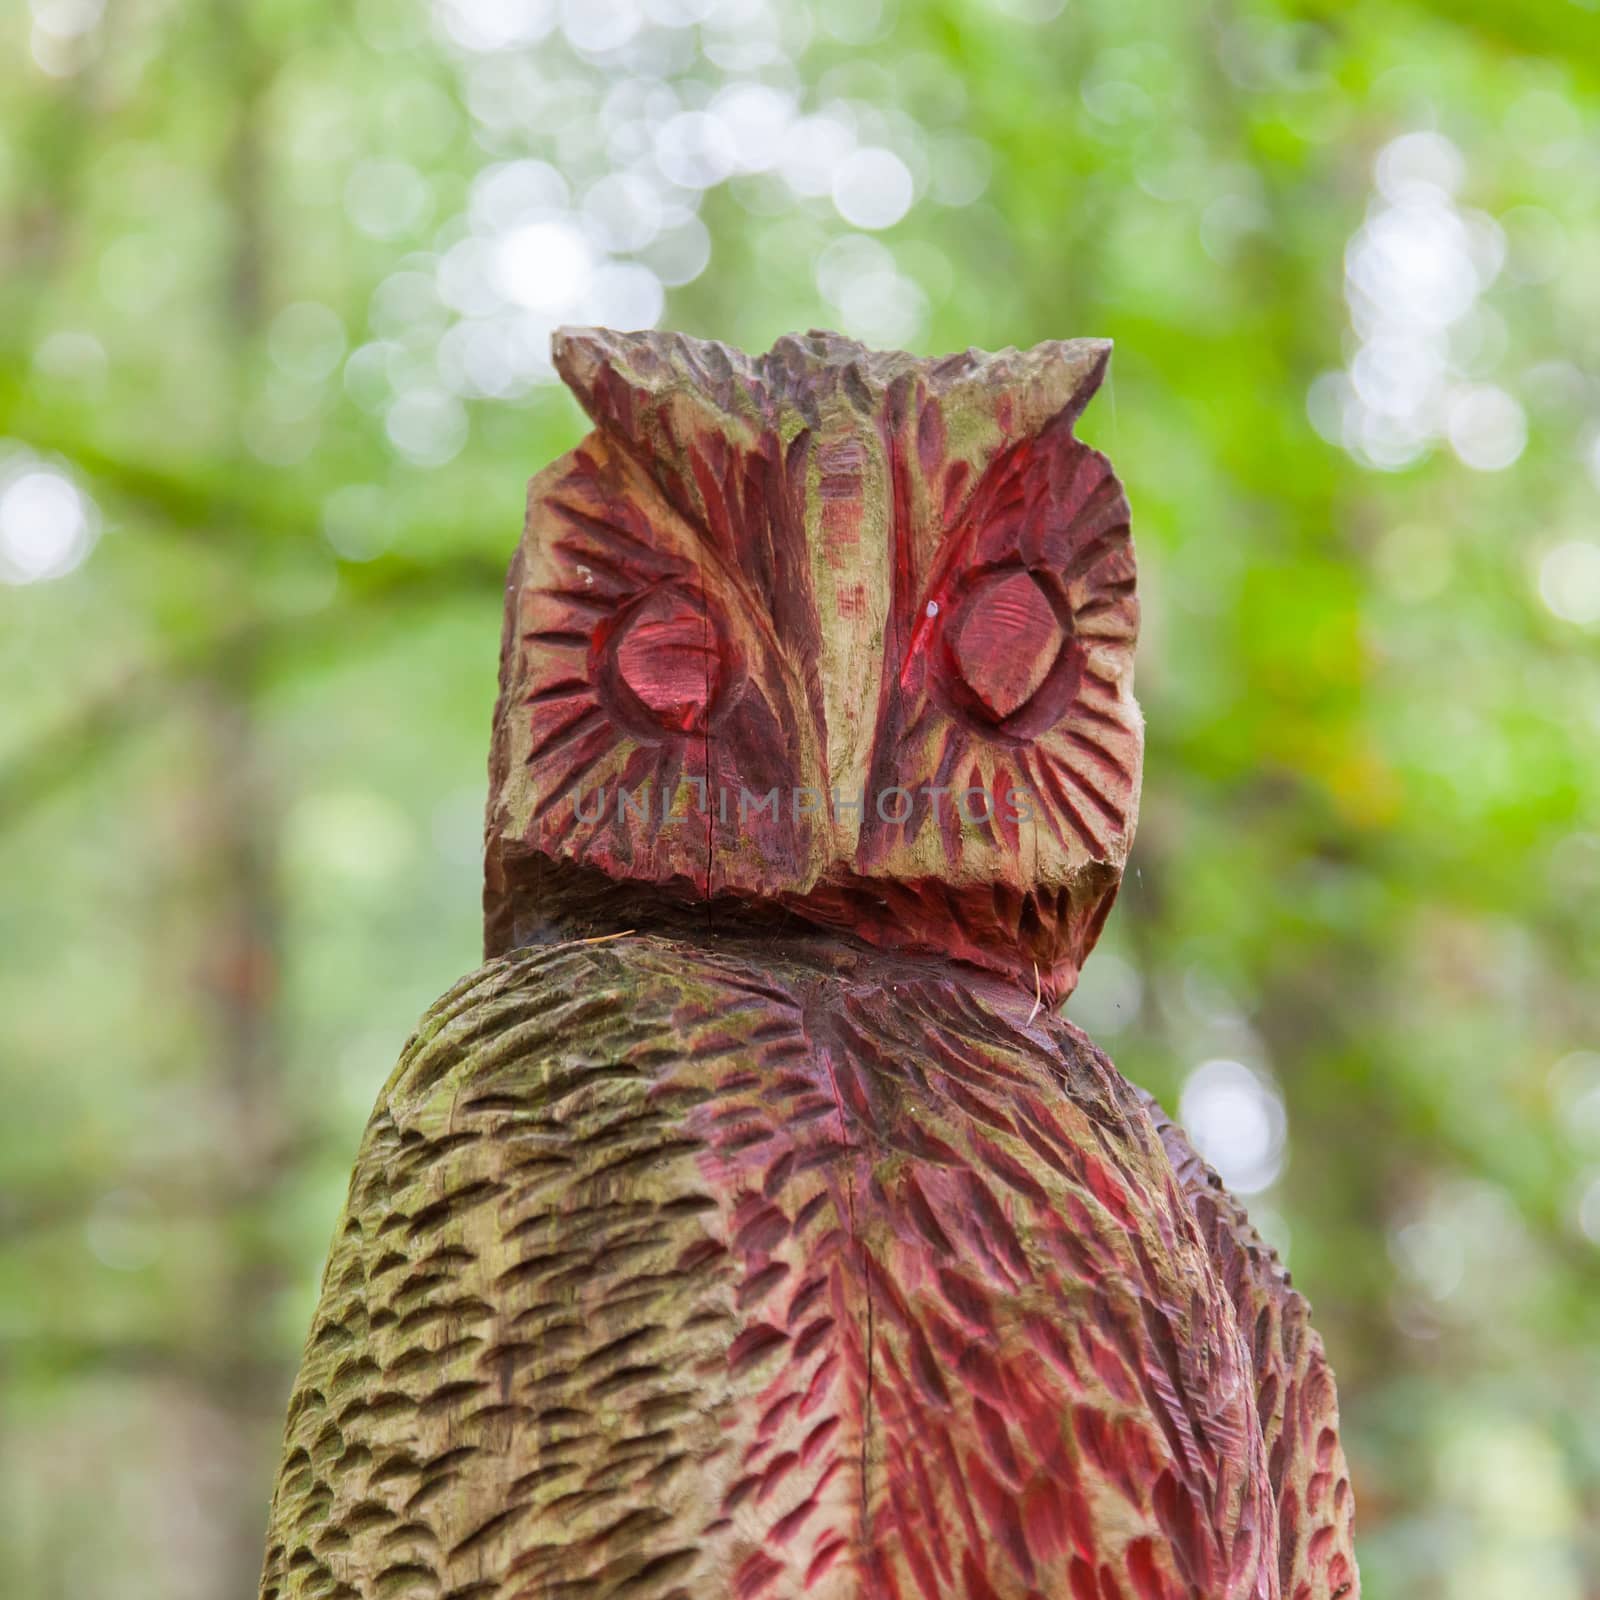 Old wooden carved owl in a forrest